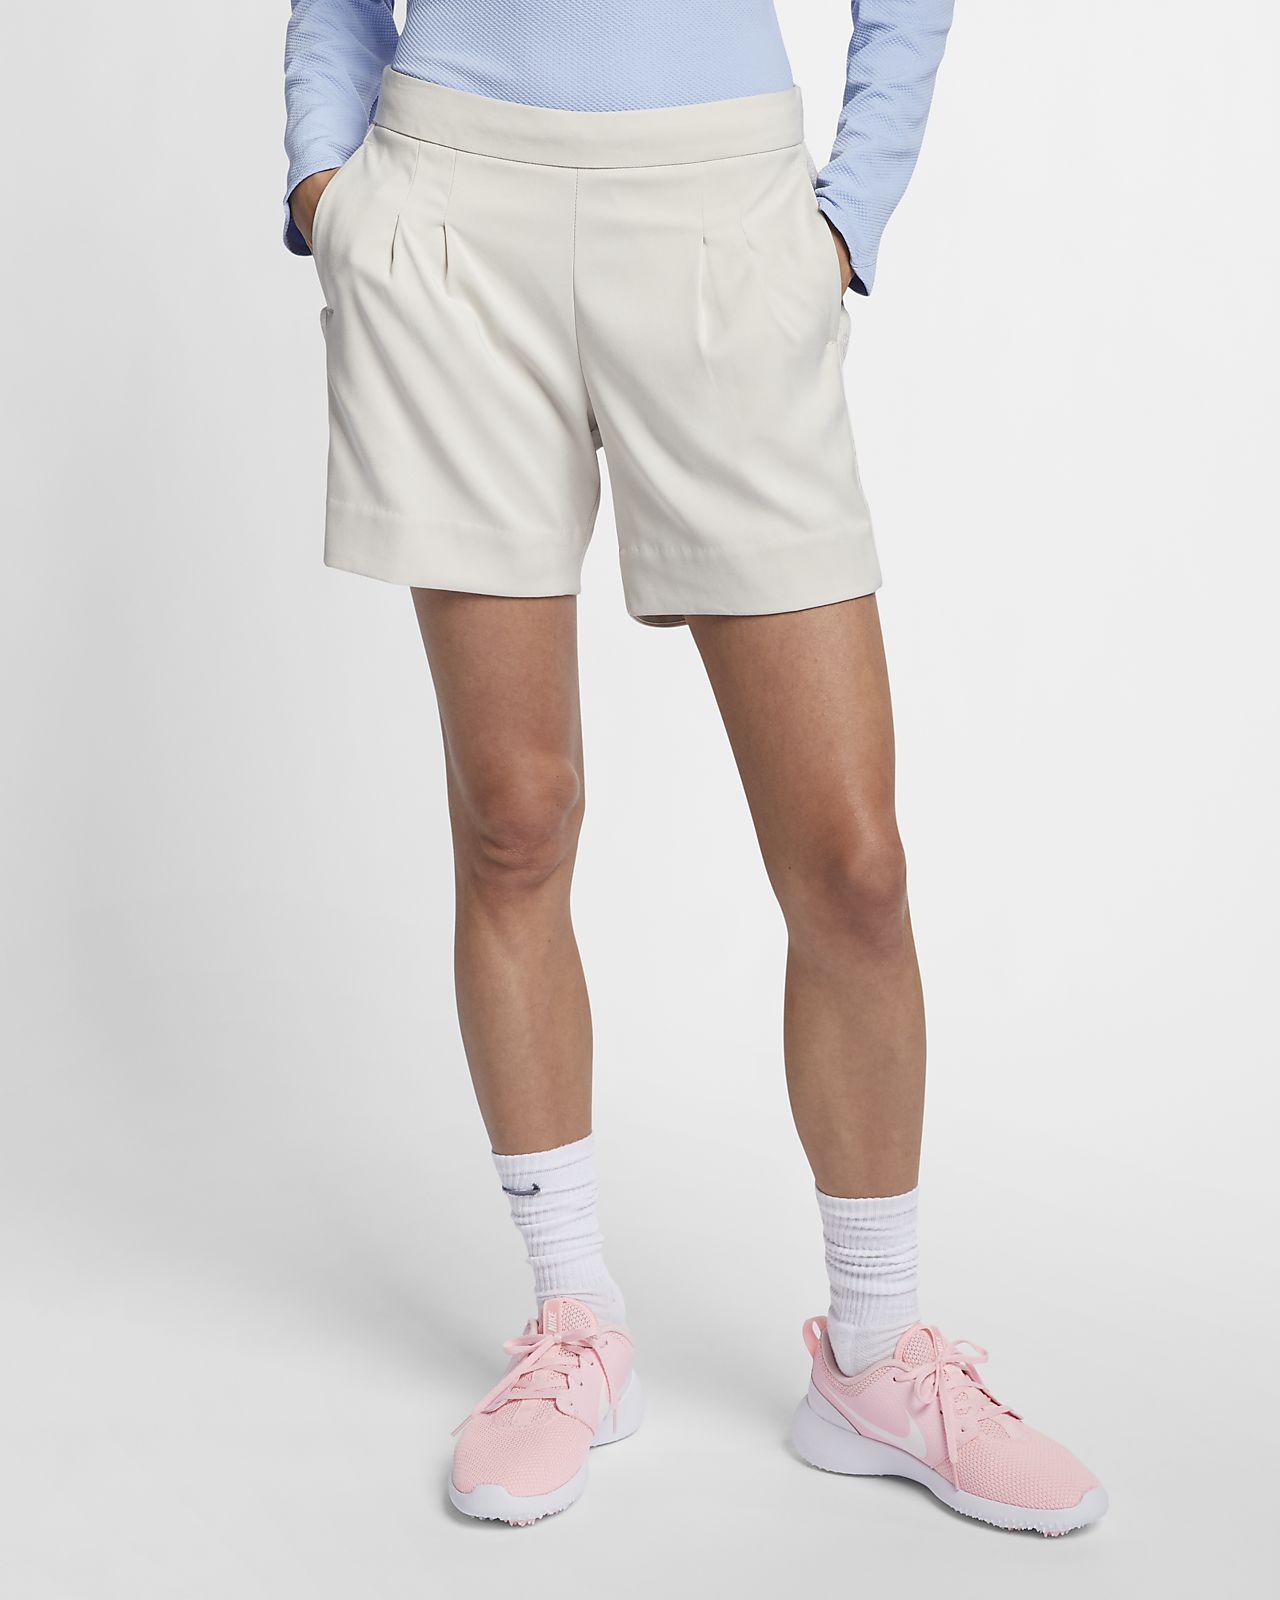 Buy > nike dri fit golf shorts > in stock